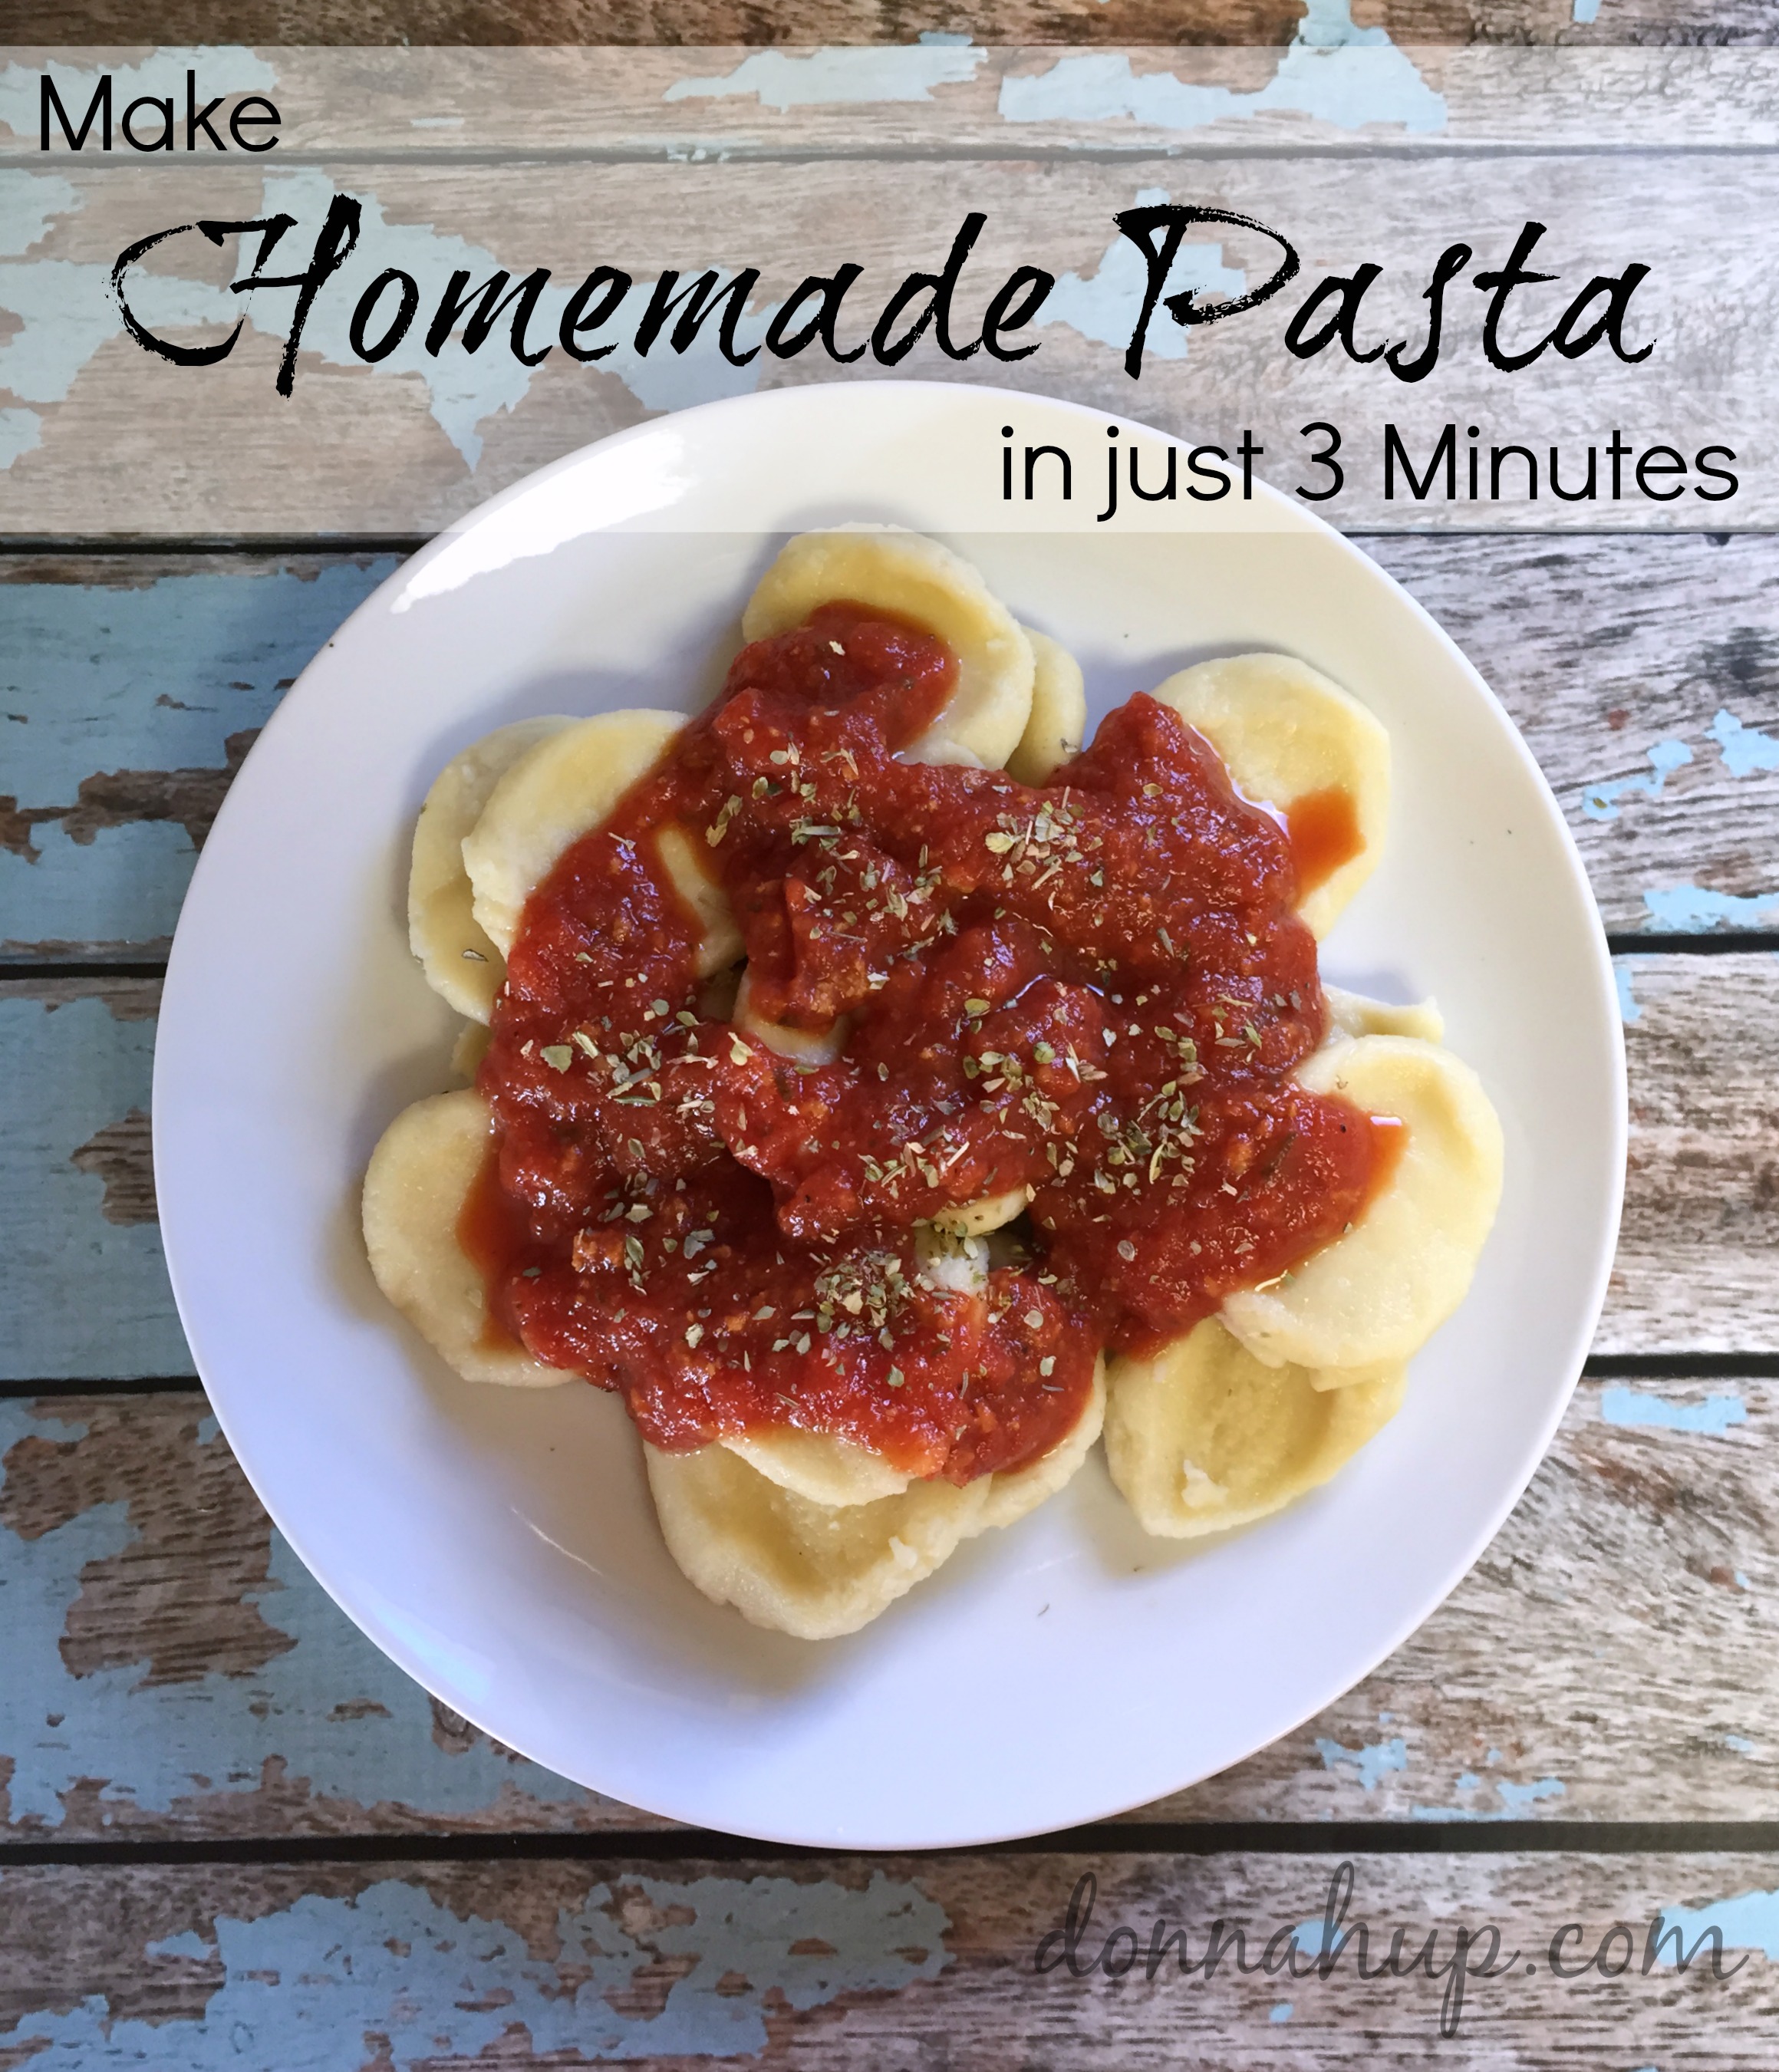 Make Fabio Viviani's Homemade Pasta in just 3 Minutes